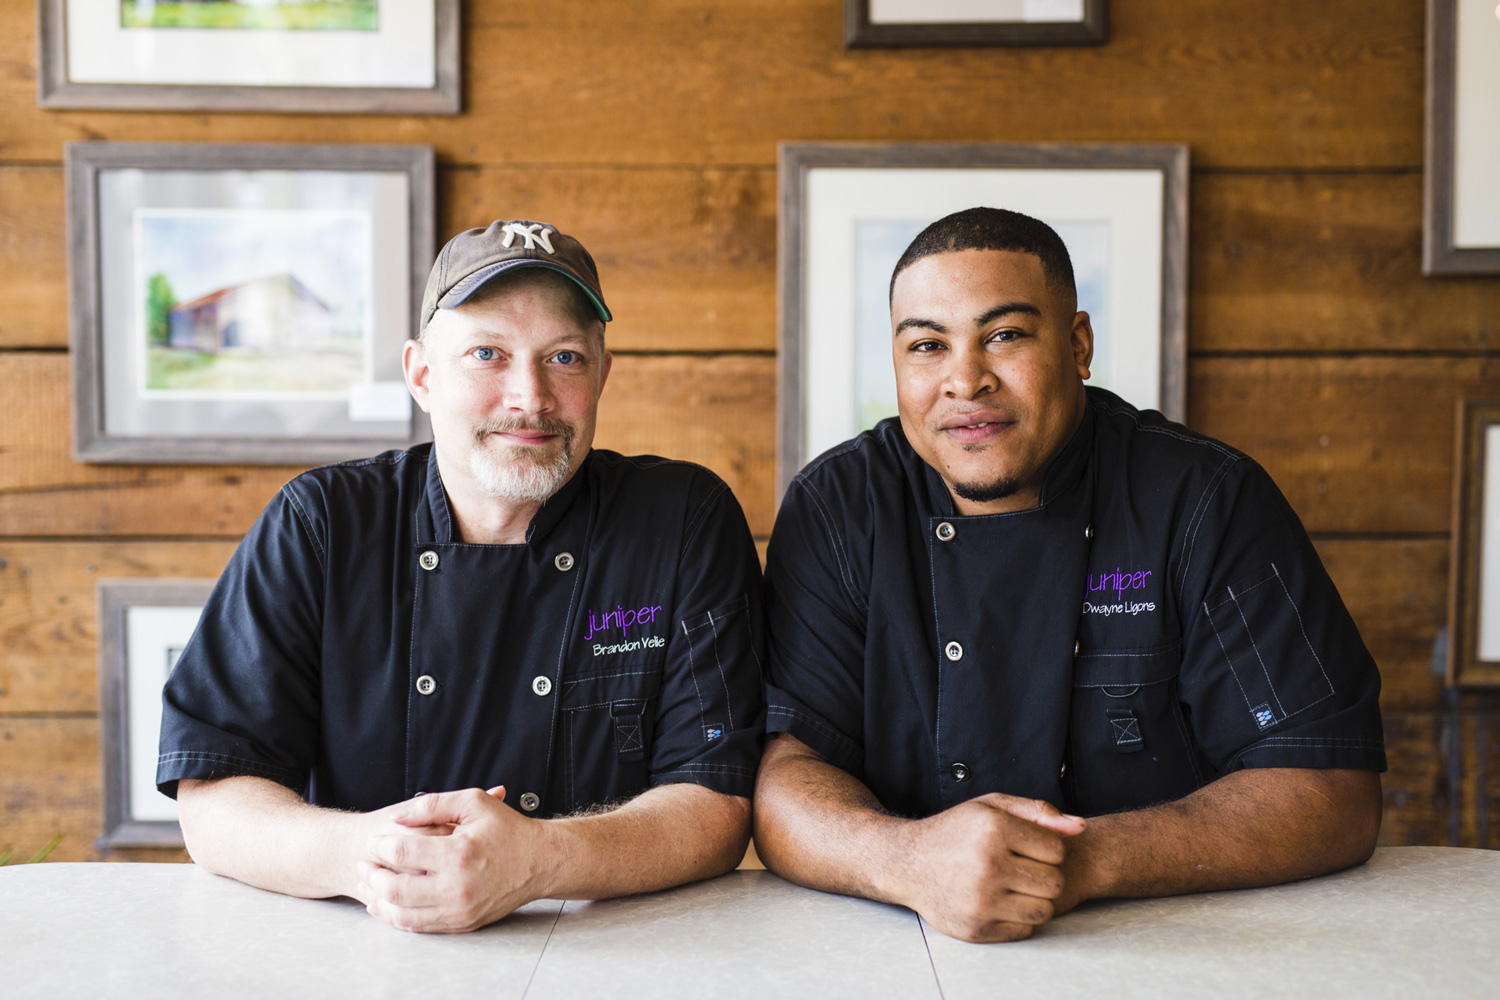 Chef Brandon Velie and Dwayne Ligons